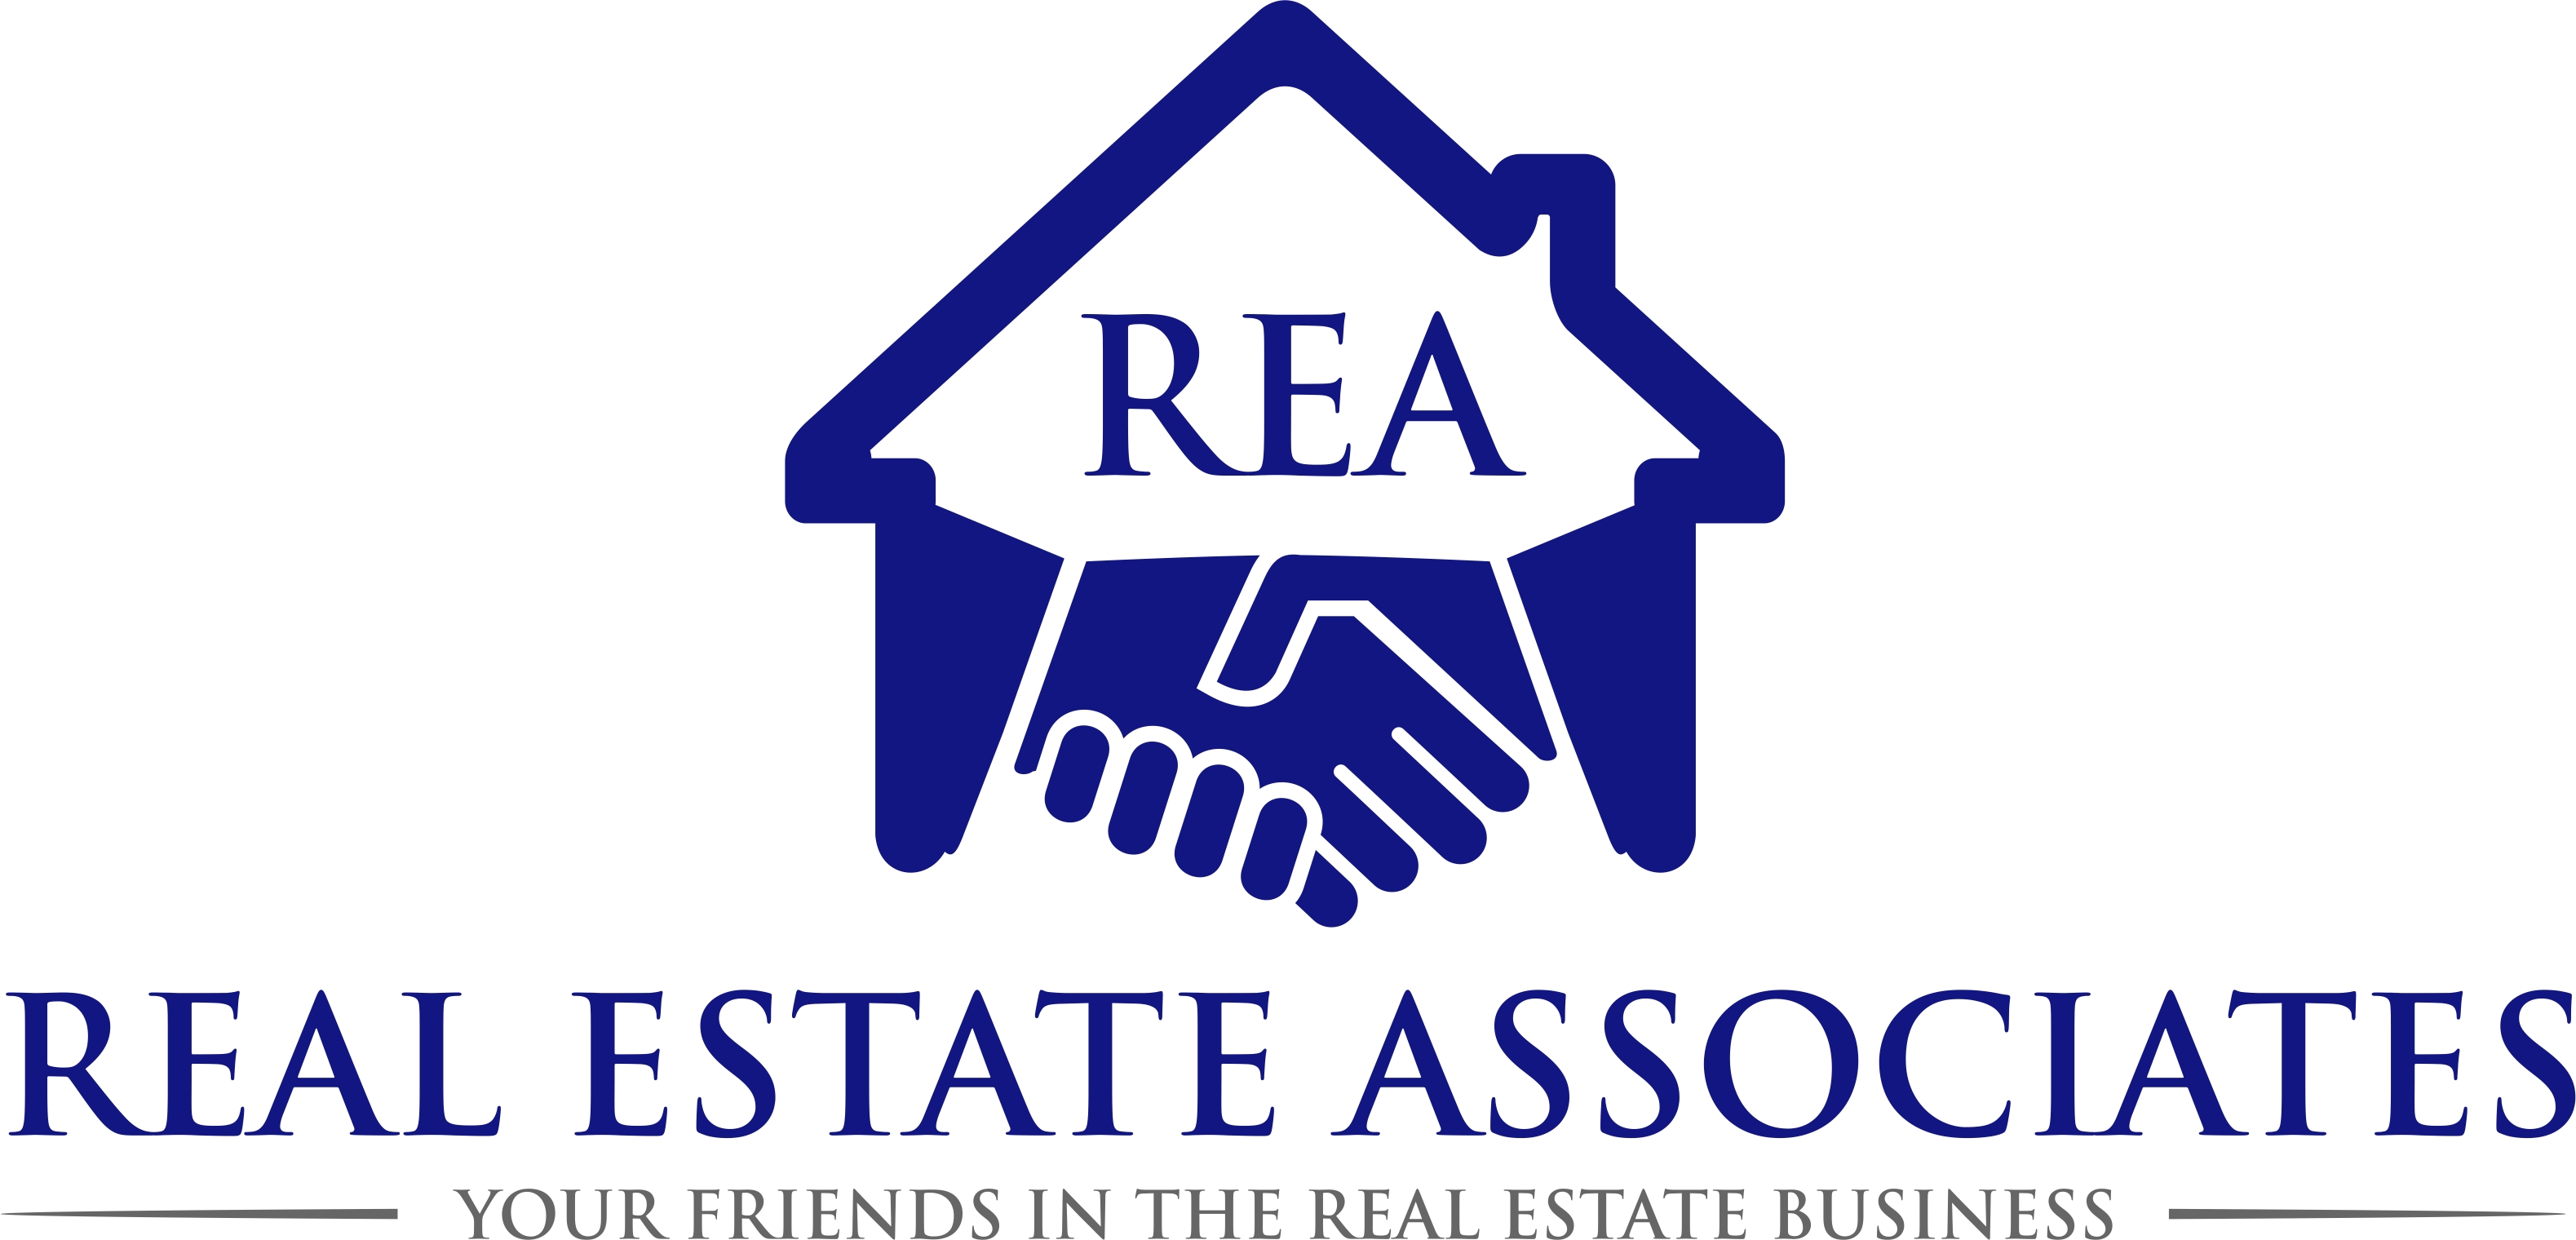 Real Estate Associates